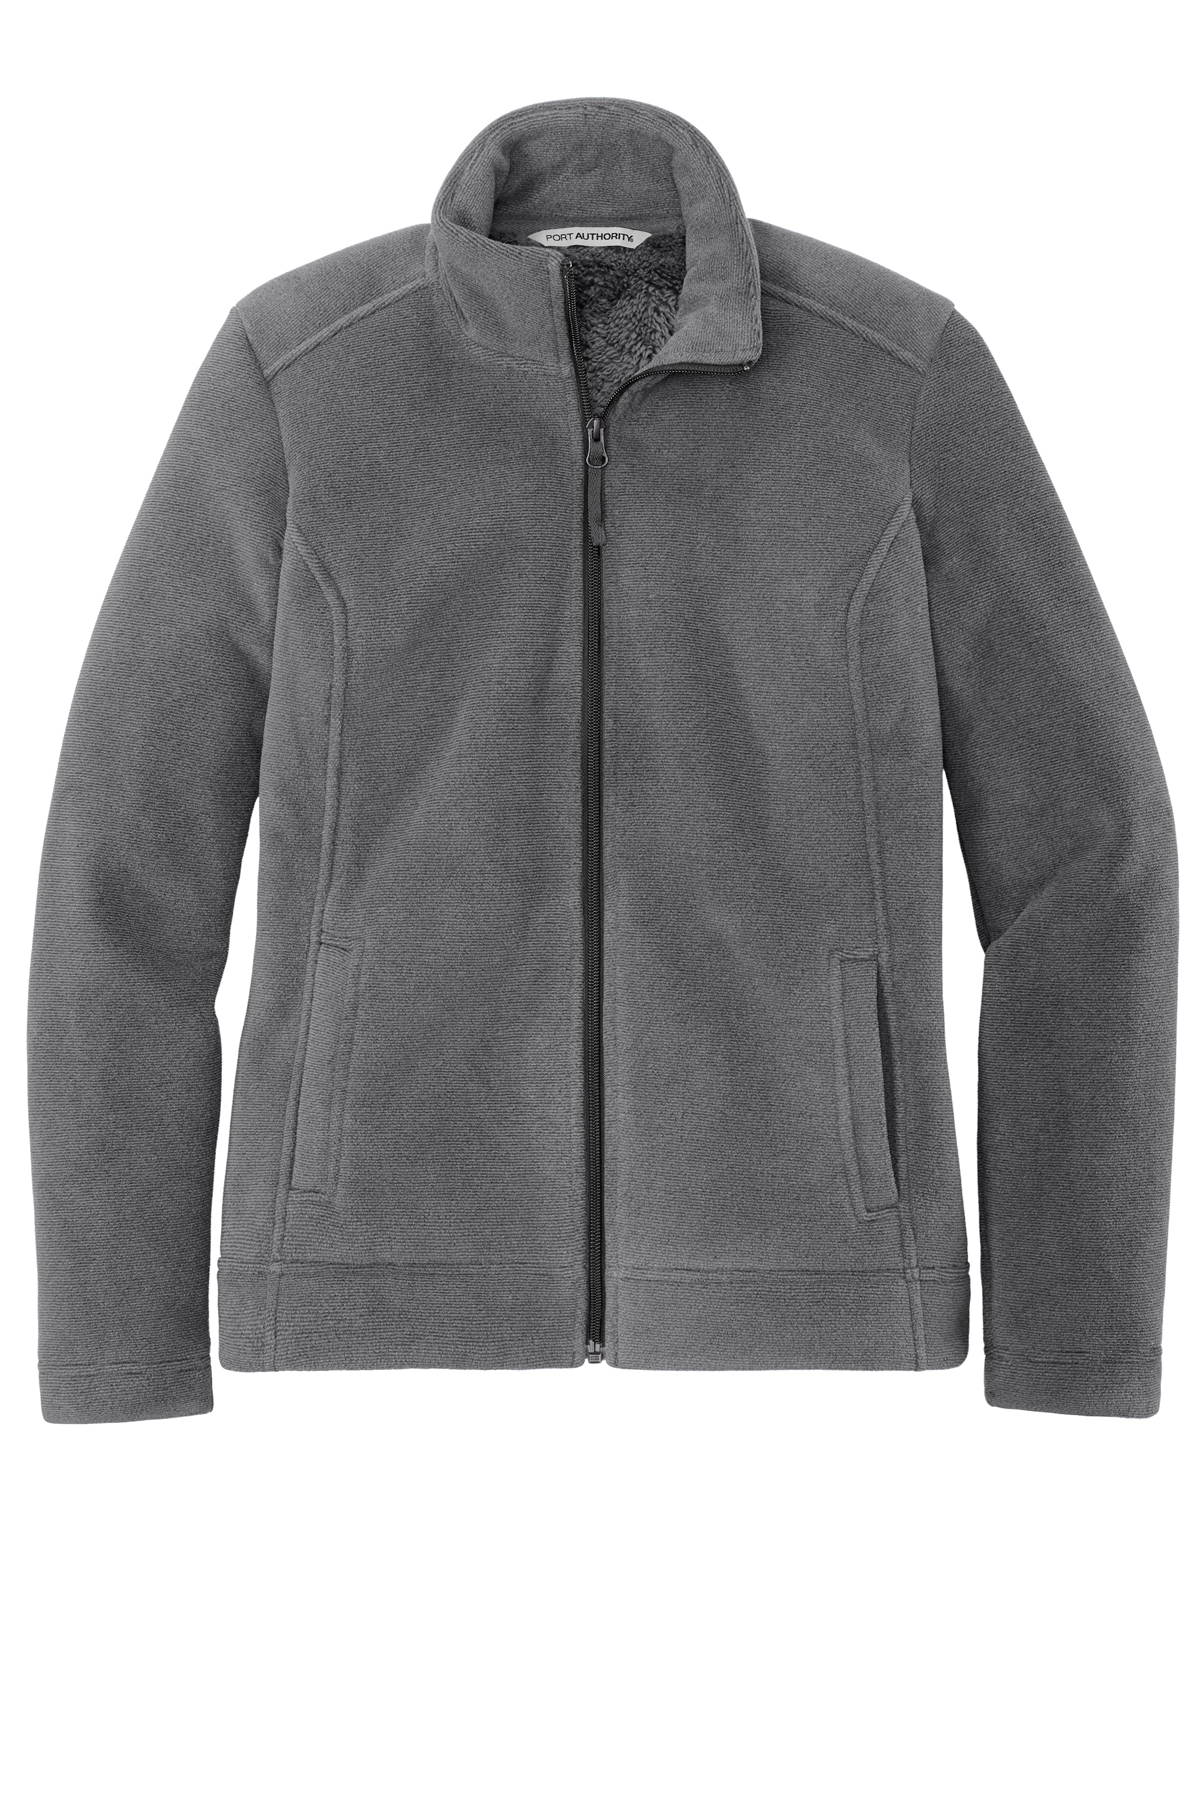 Port Authority Ladies Ultra Warm Brushed Fleece Jacket | Product | Port ...